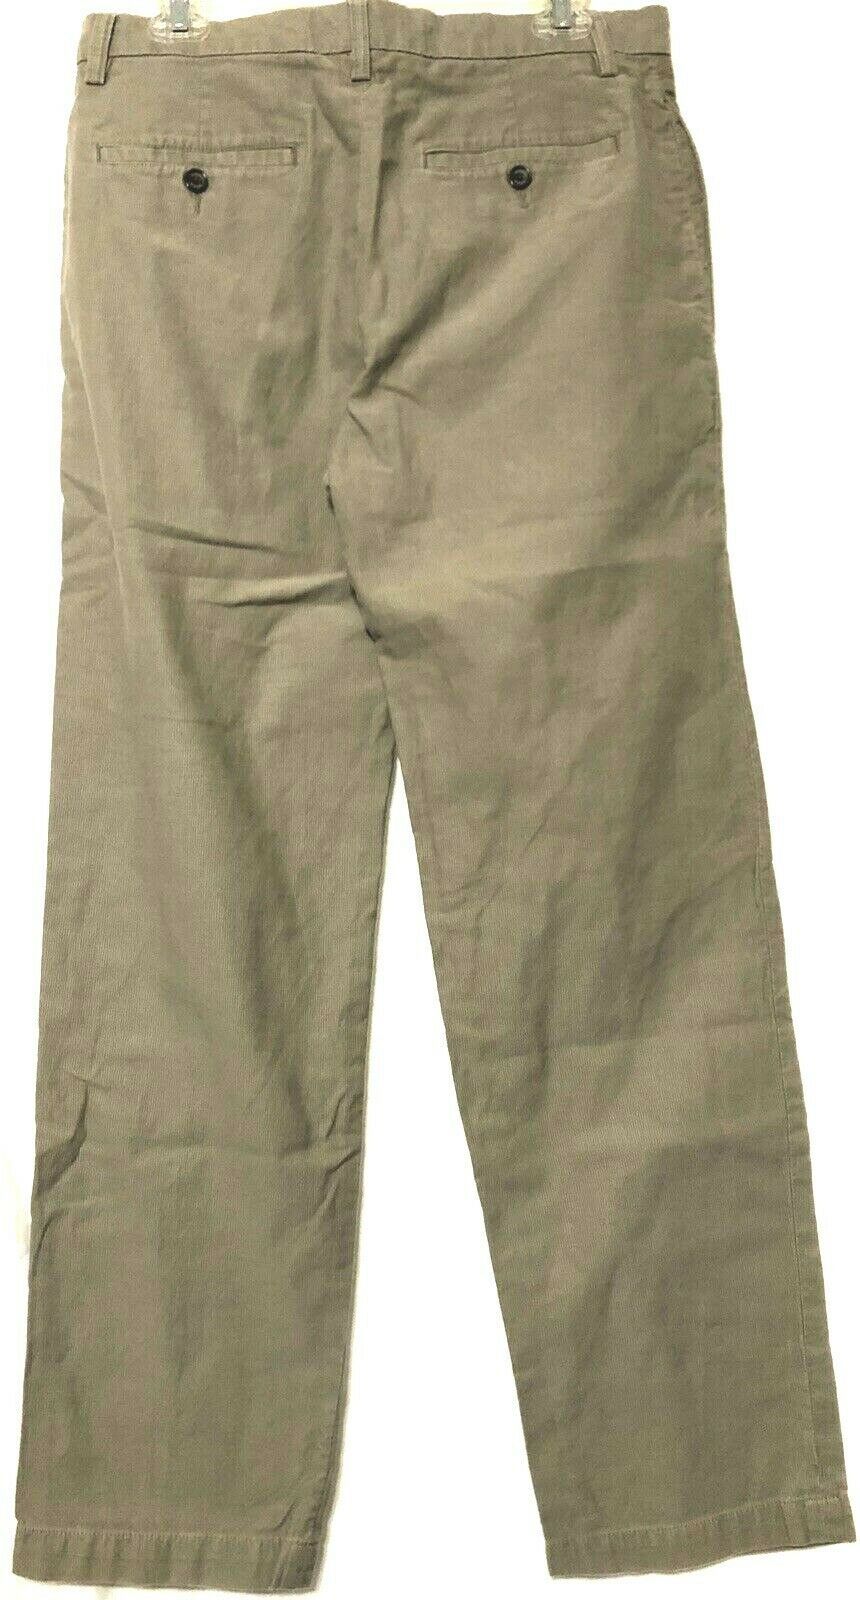 Banana Republic Mens Tan/Brown Ribbed Textured Khaki Pants Size 32 x 32 ...